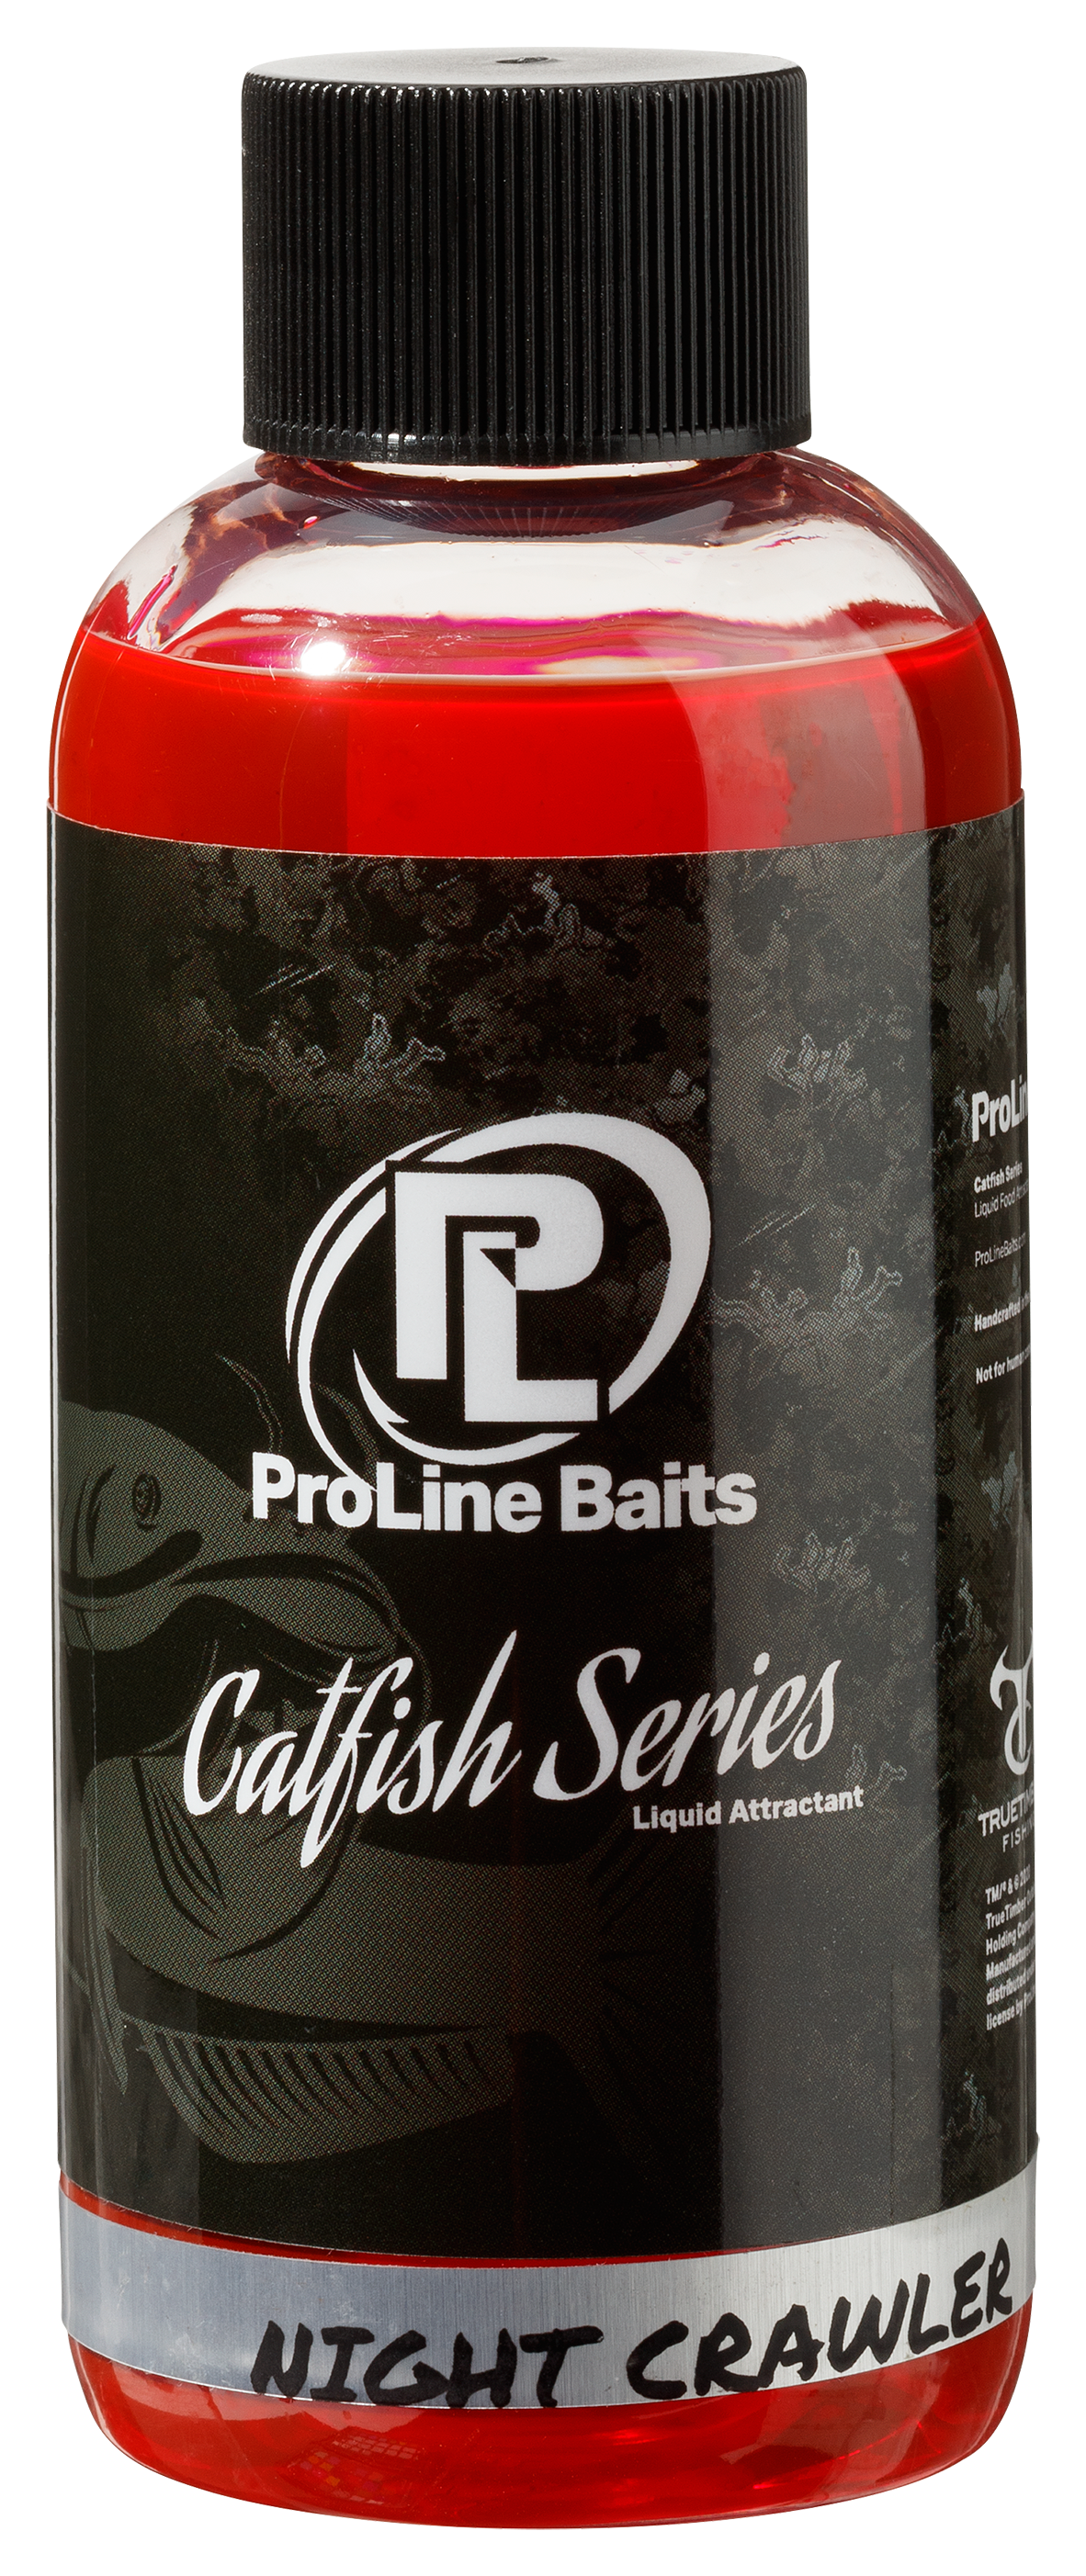 Proline Baits Catfish Series Fish Attractant - Sweet Butternut/Garlic